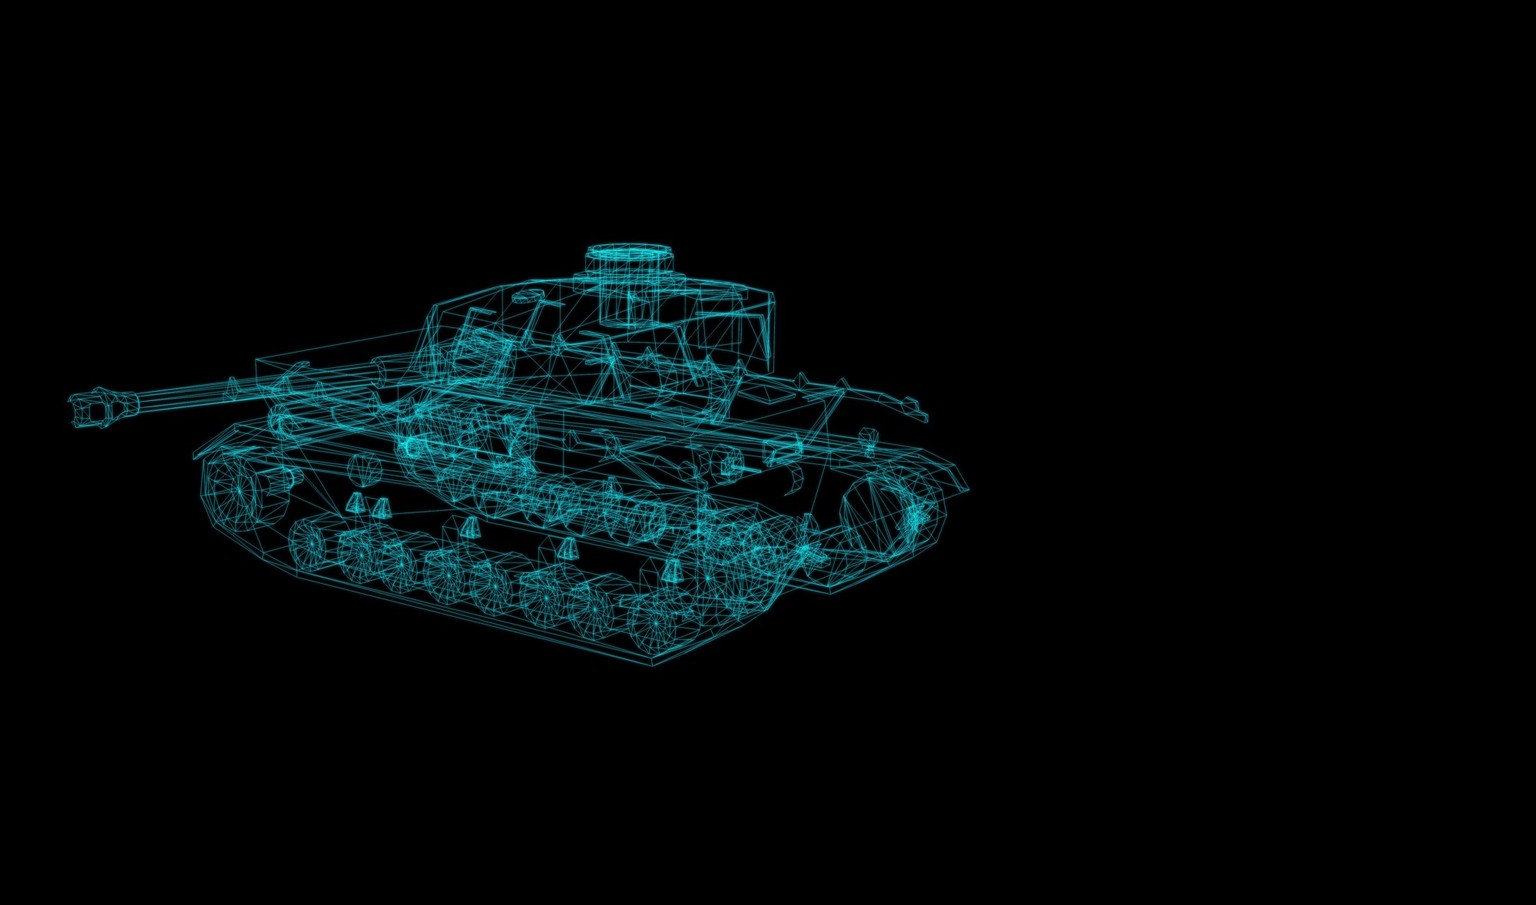 3d rendering - wireframe model of Tank Hologram in Motion., 3d rendering - wireframe model of Tank Hologram in Motion.., 3d rendering - wireframe model of Tank Hologram in Motion.., 03.07.2020, Copyri ...